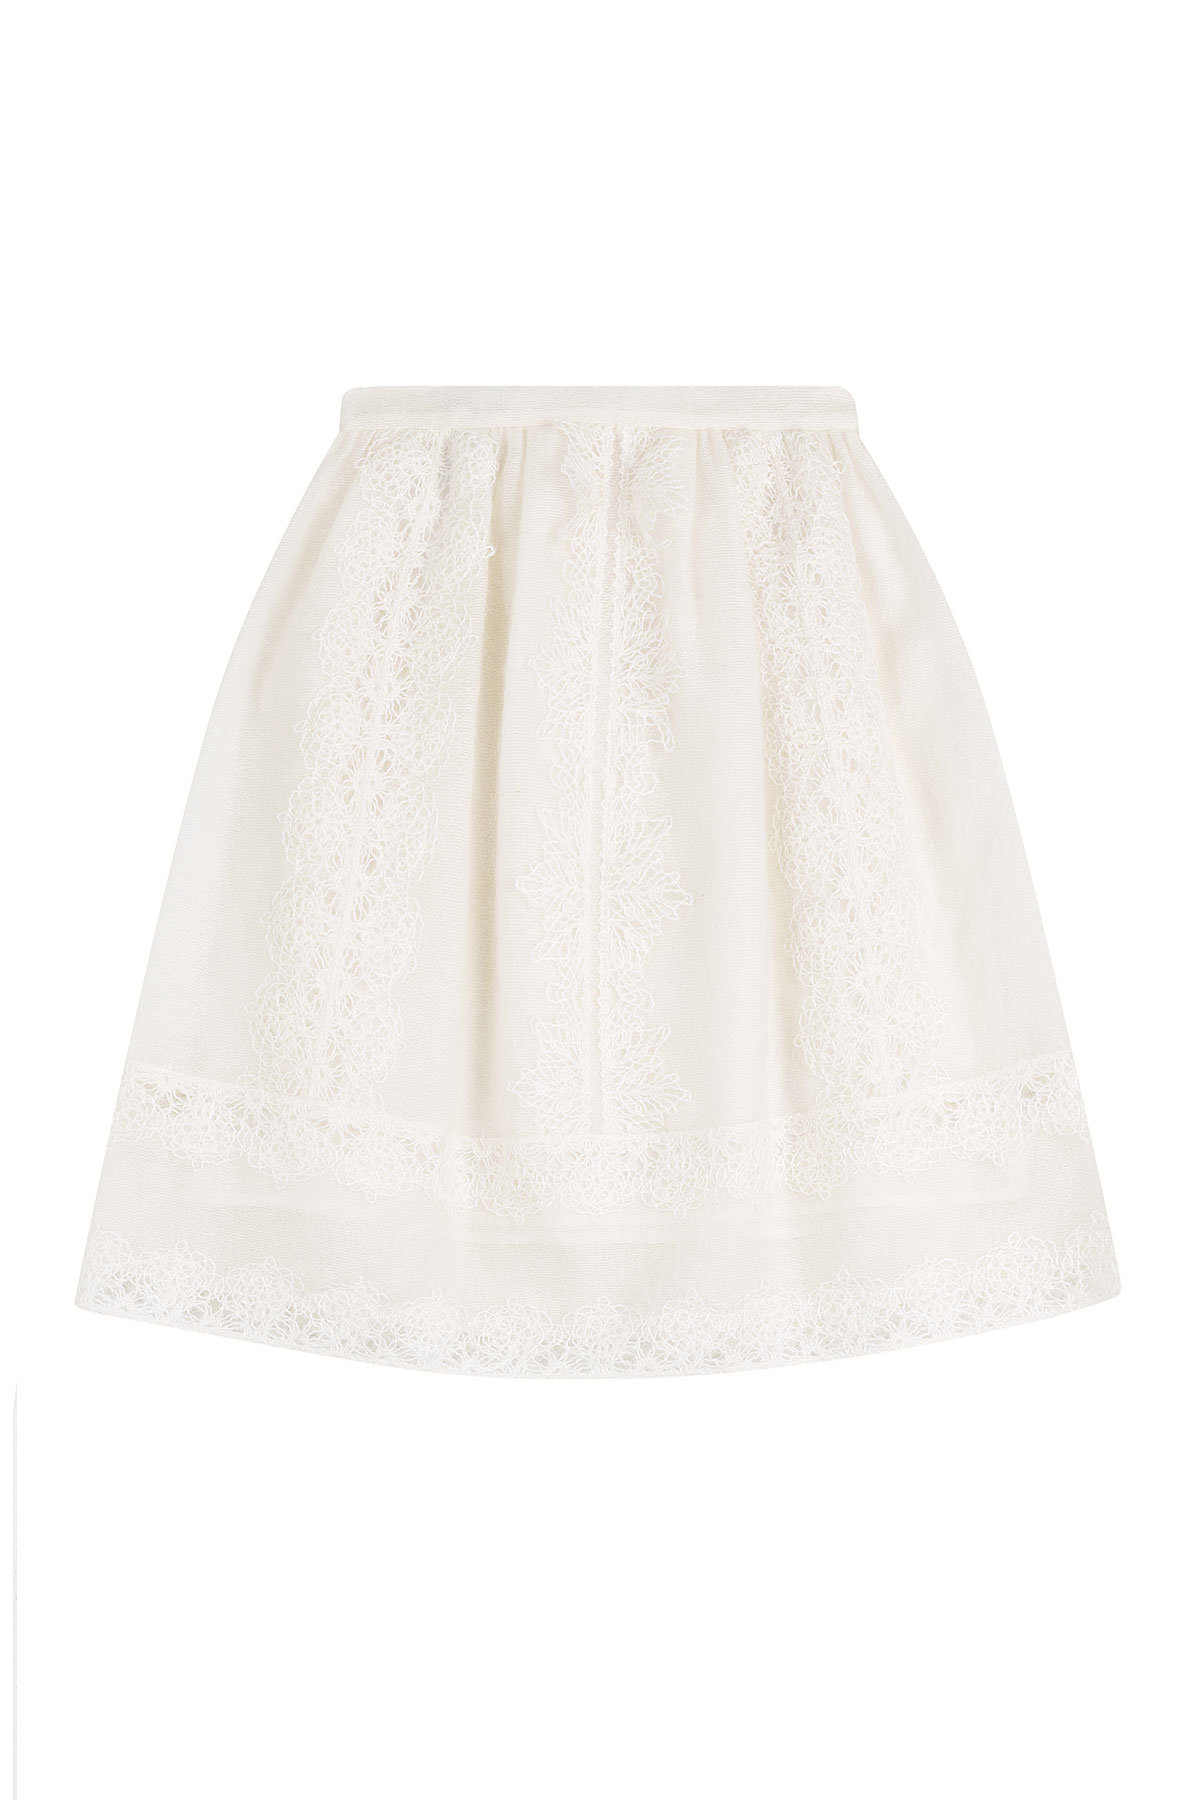 Alberta Ferretti - Mohair and Silk Embroidered Skirt